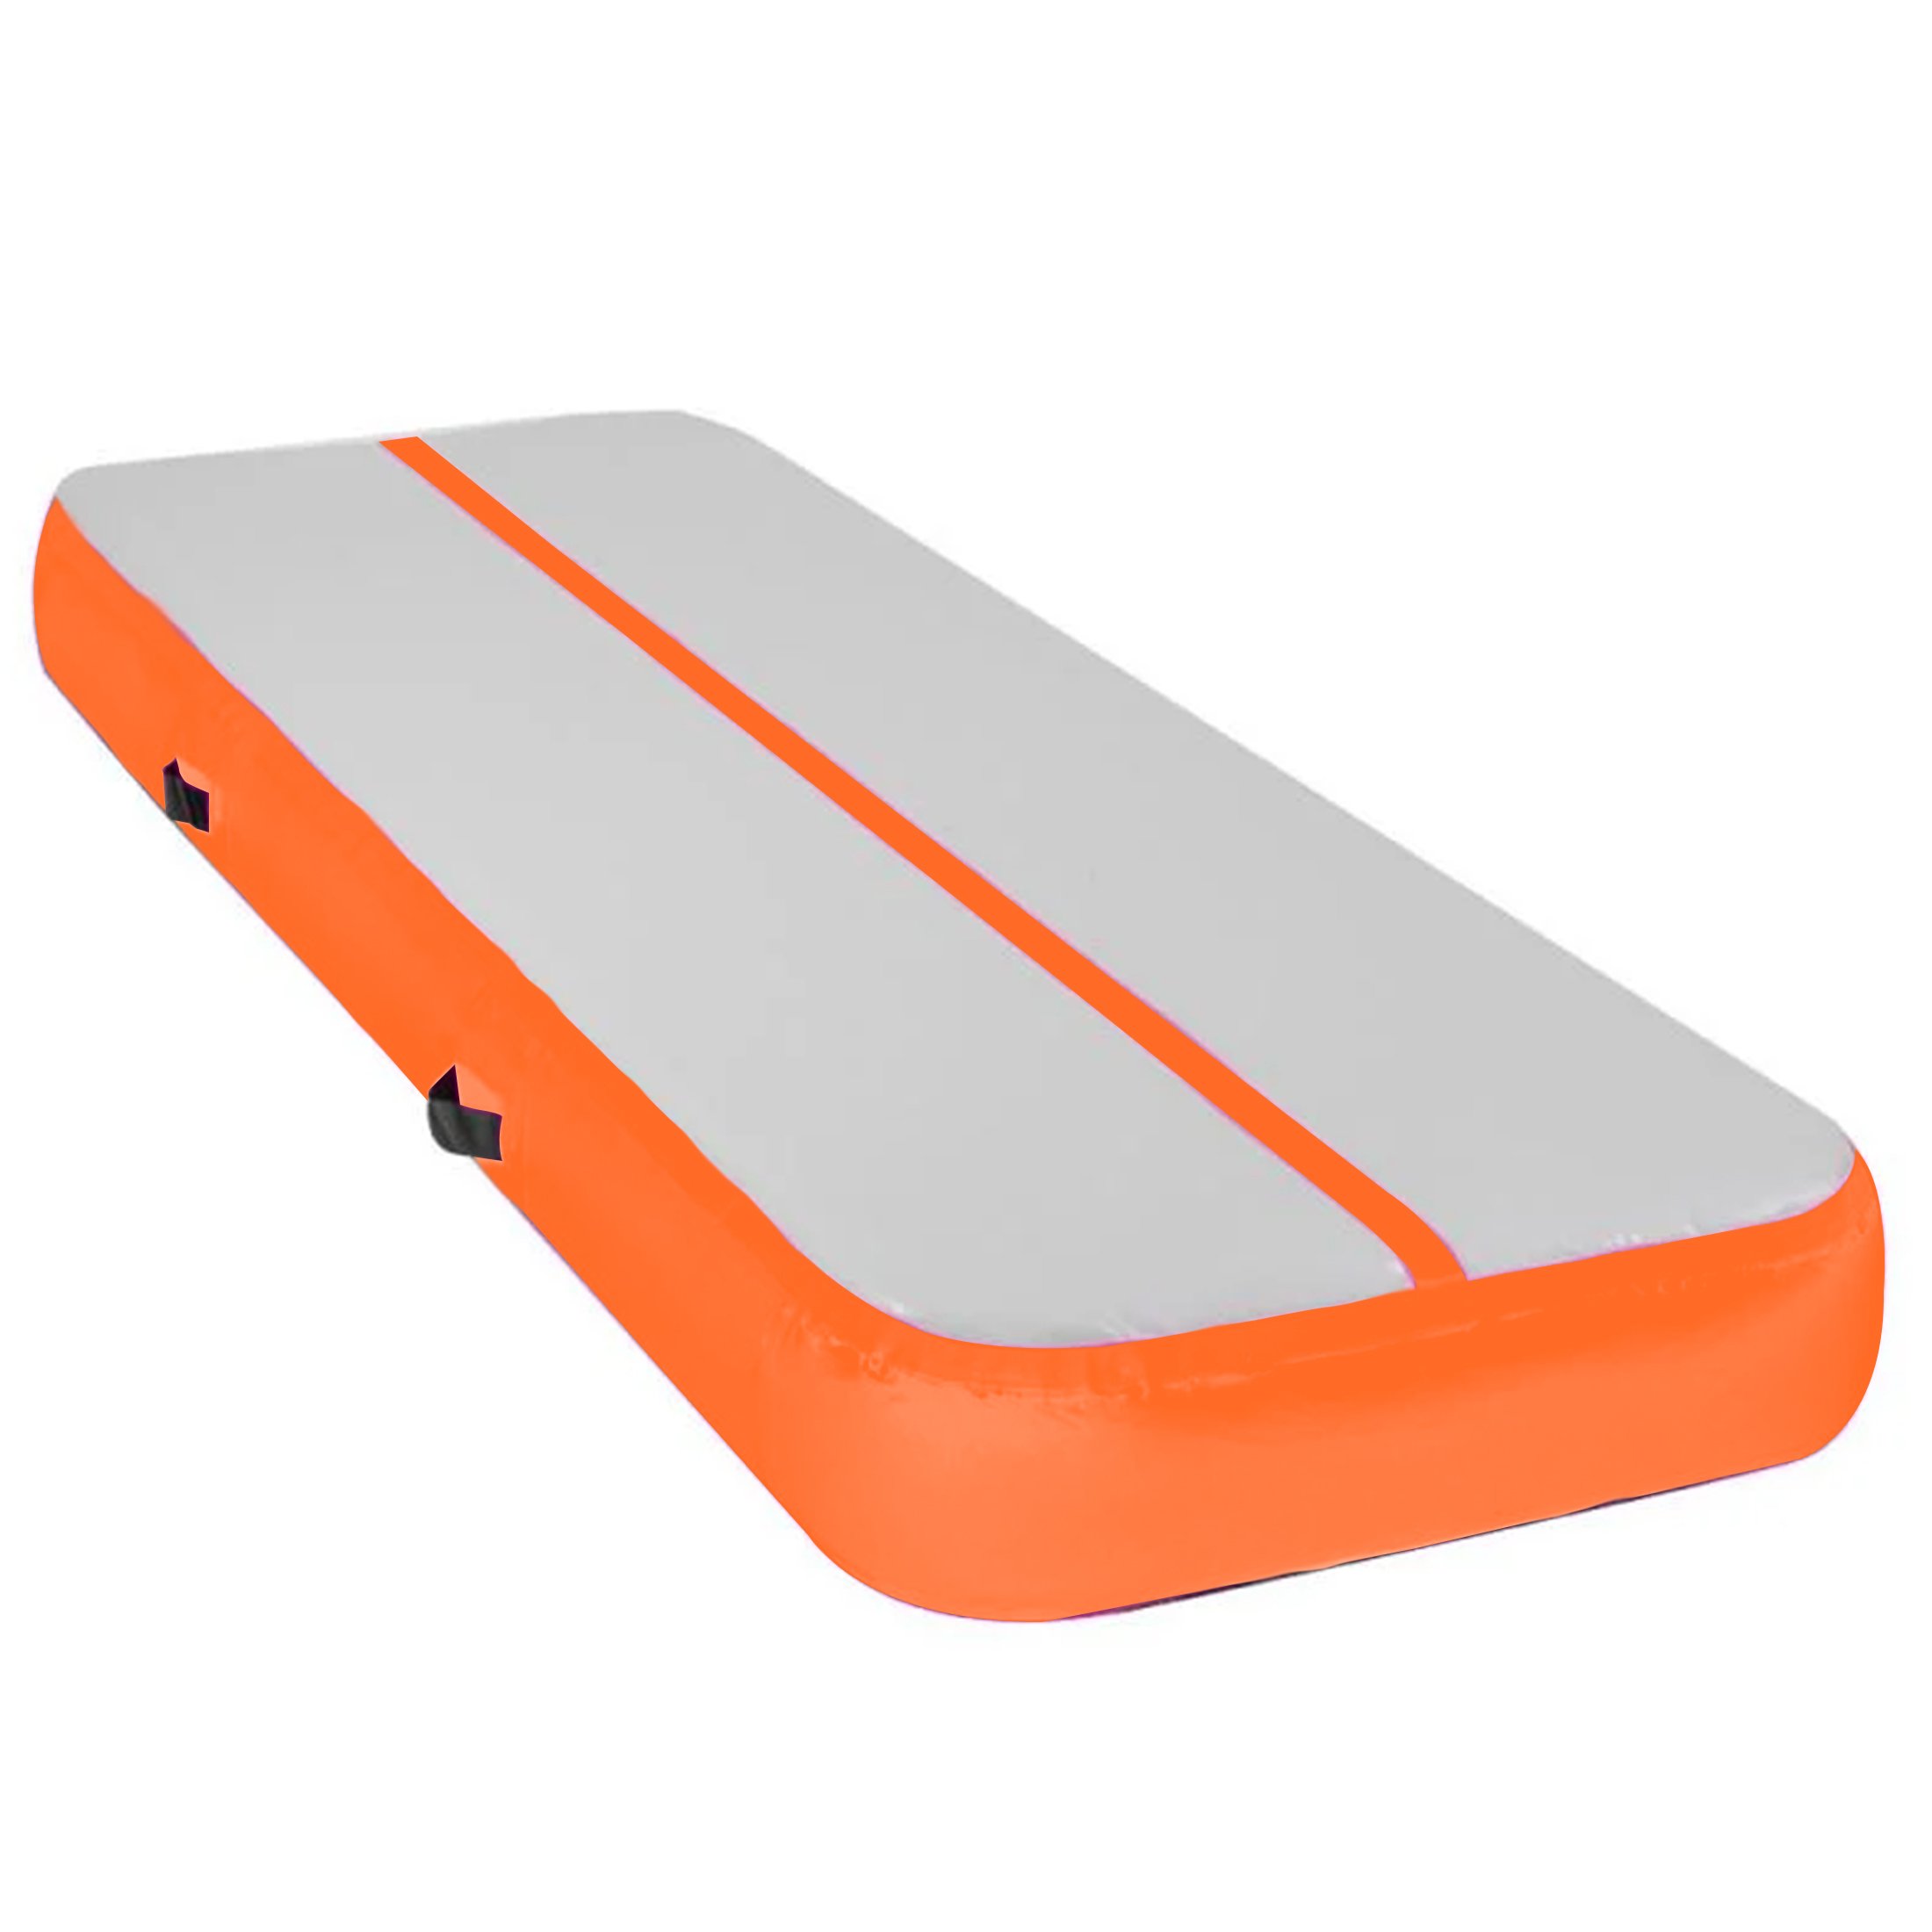 4m x 1m Air Track Inflatable Gymnastics Tumbling Mat - Orange 2